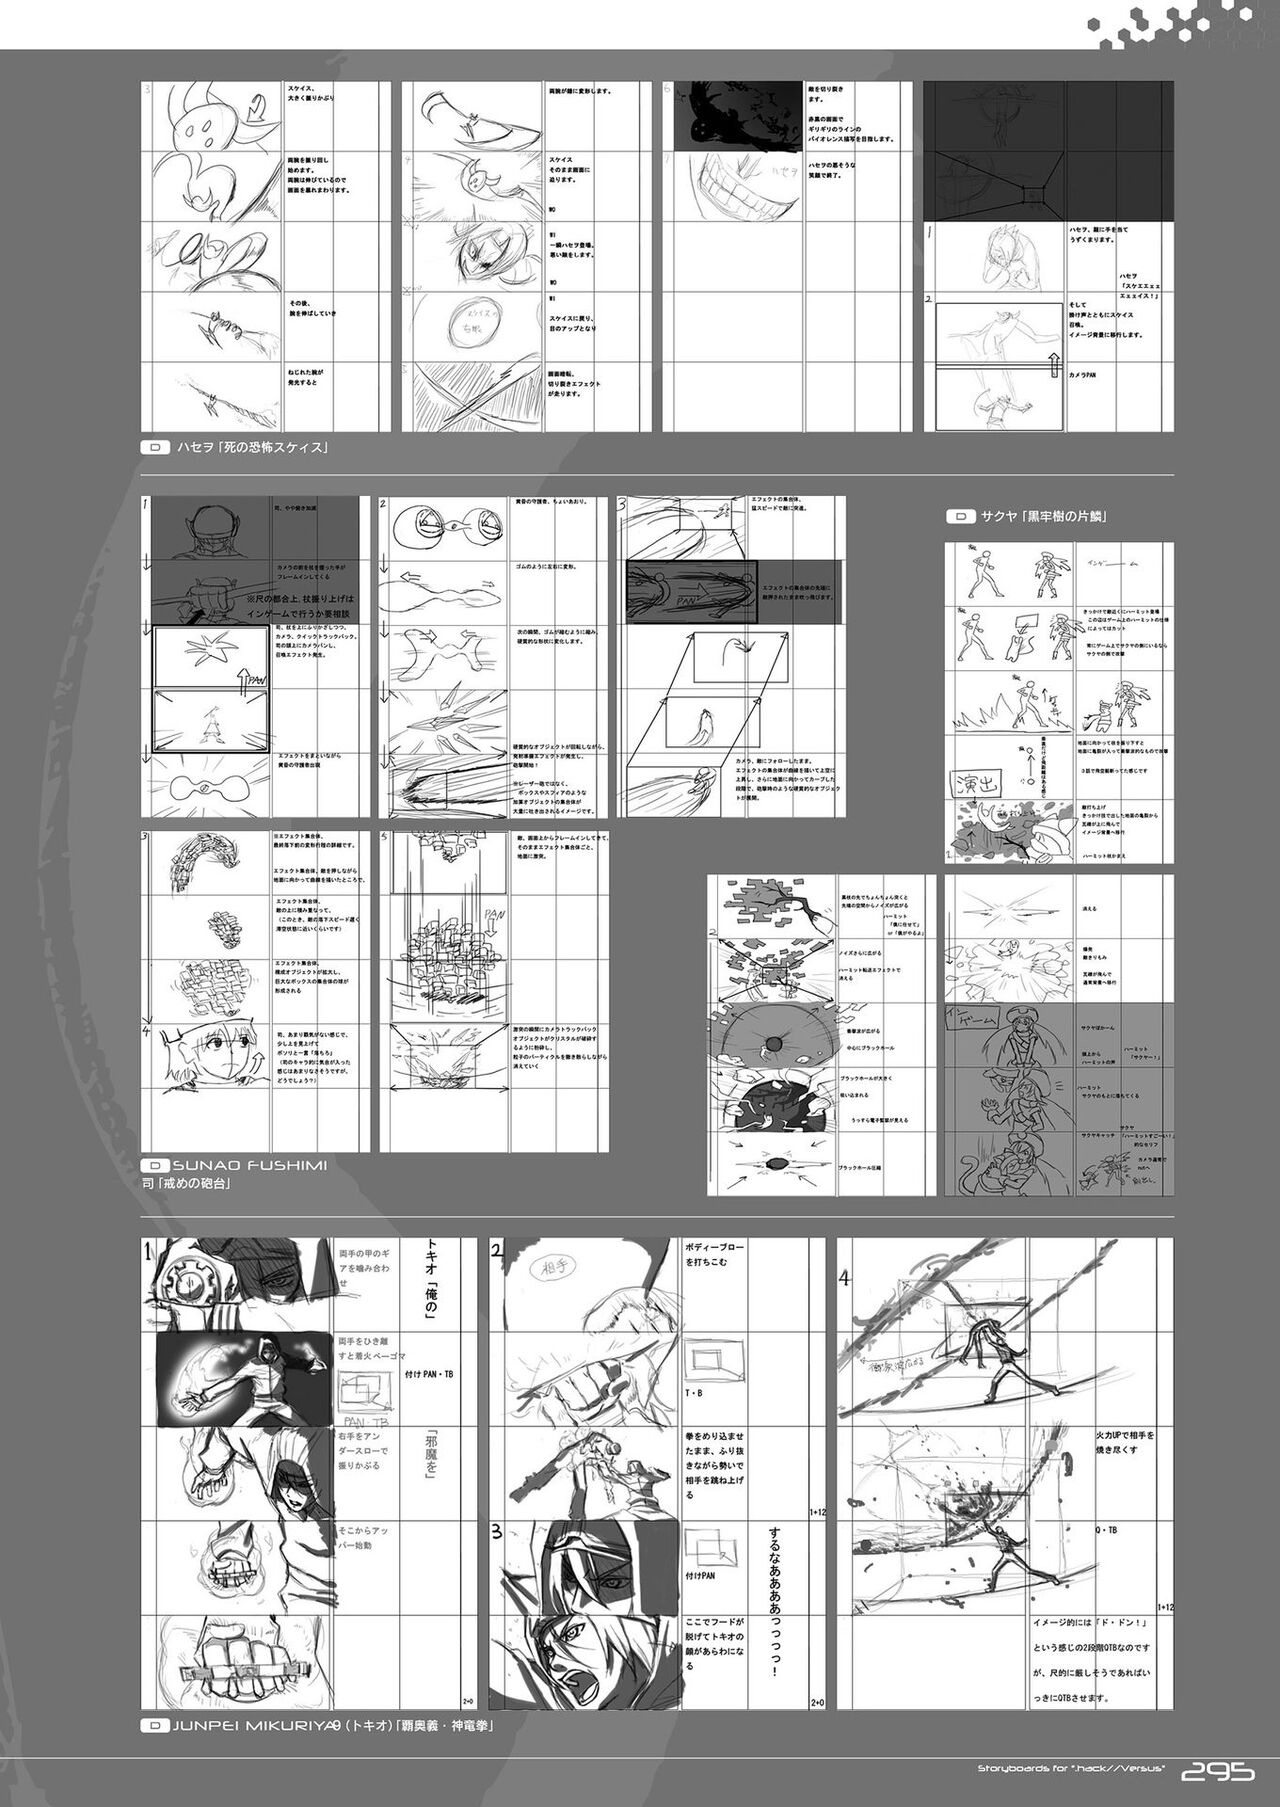 Dot Hack Sekai-no Muko ni  +Versus Complete Set  Documentation .hack //Archives _ 05 297